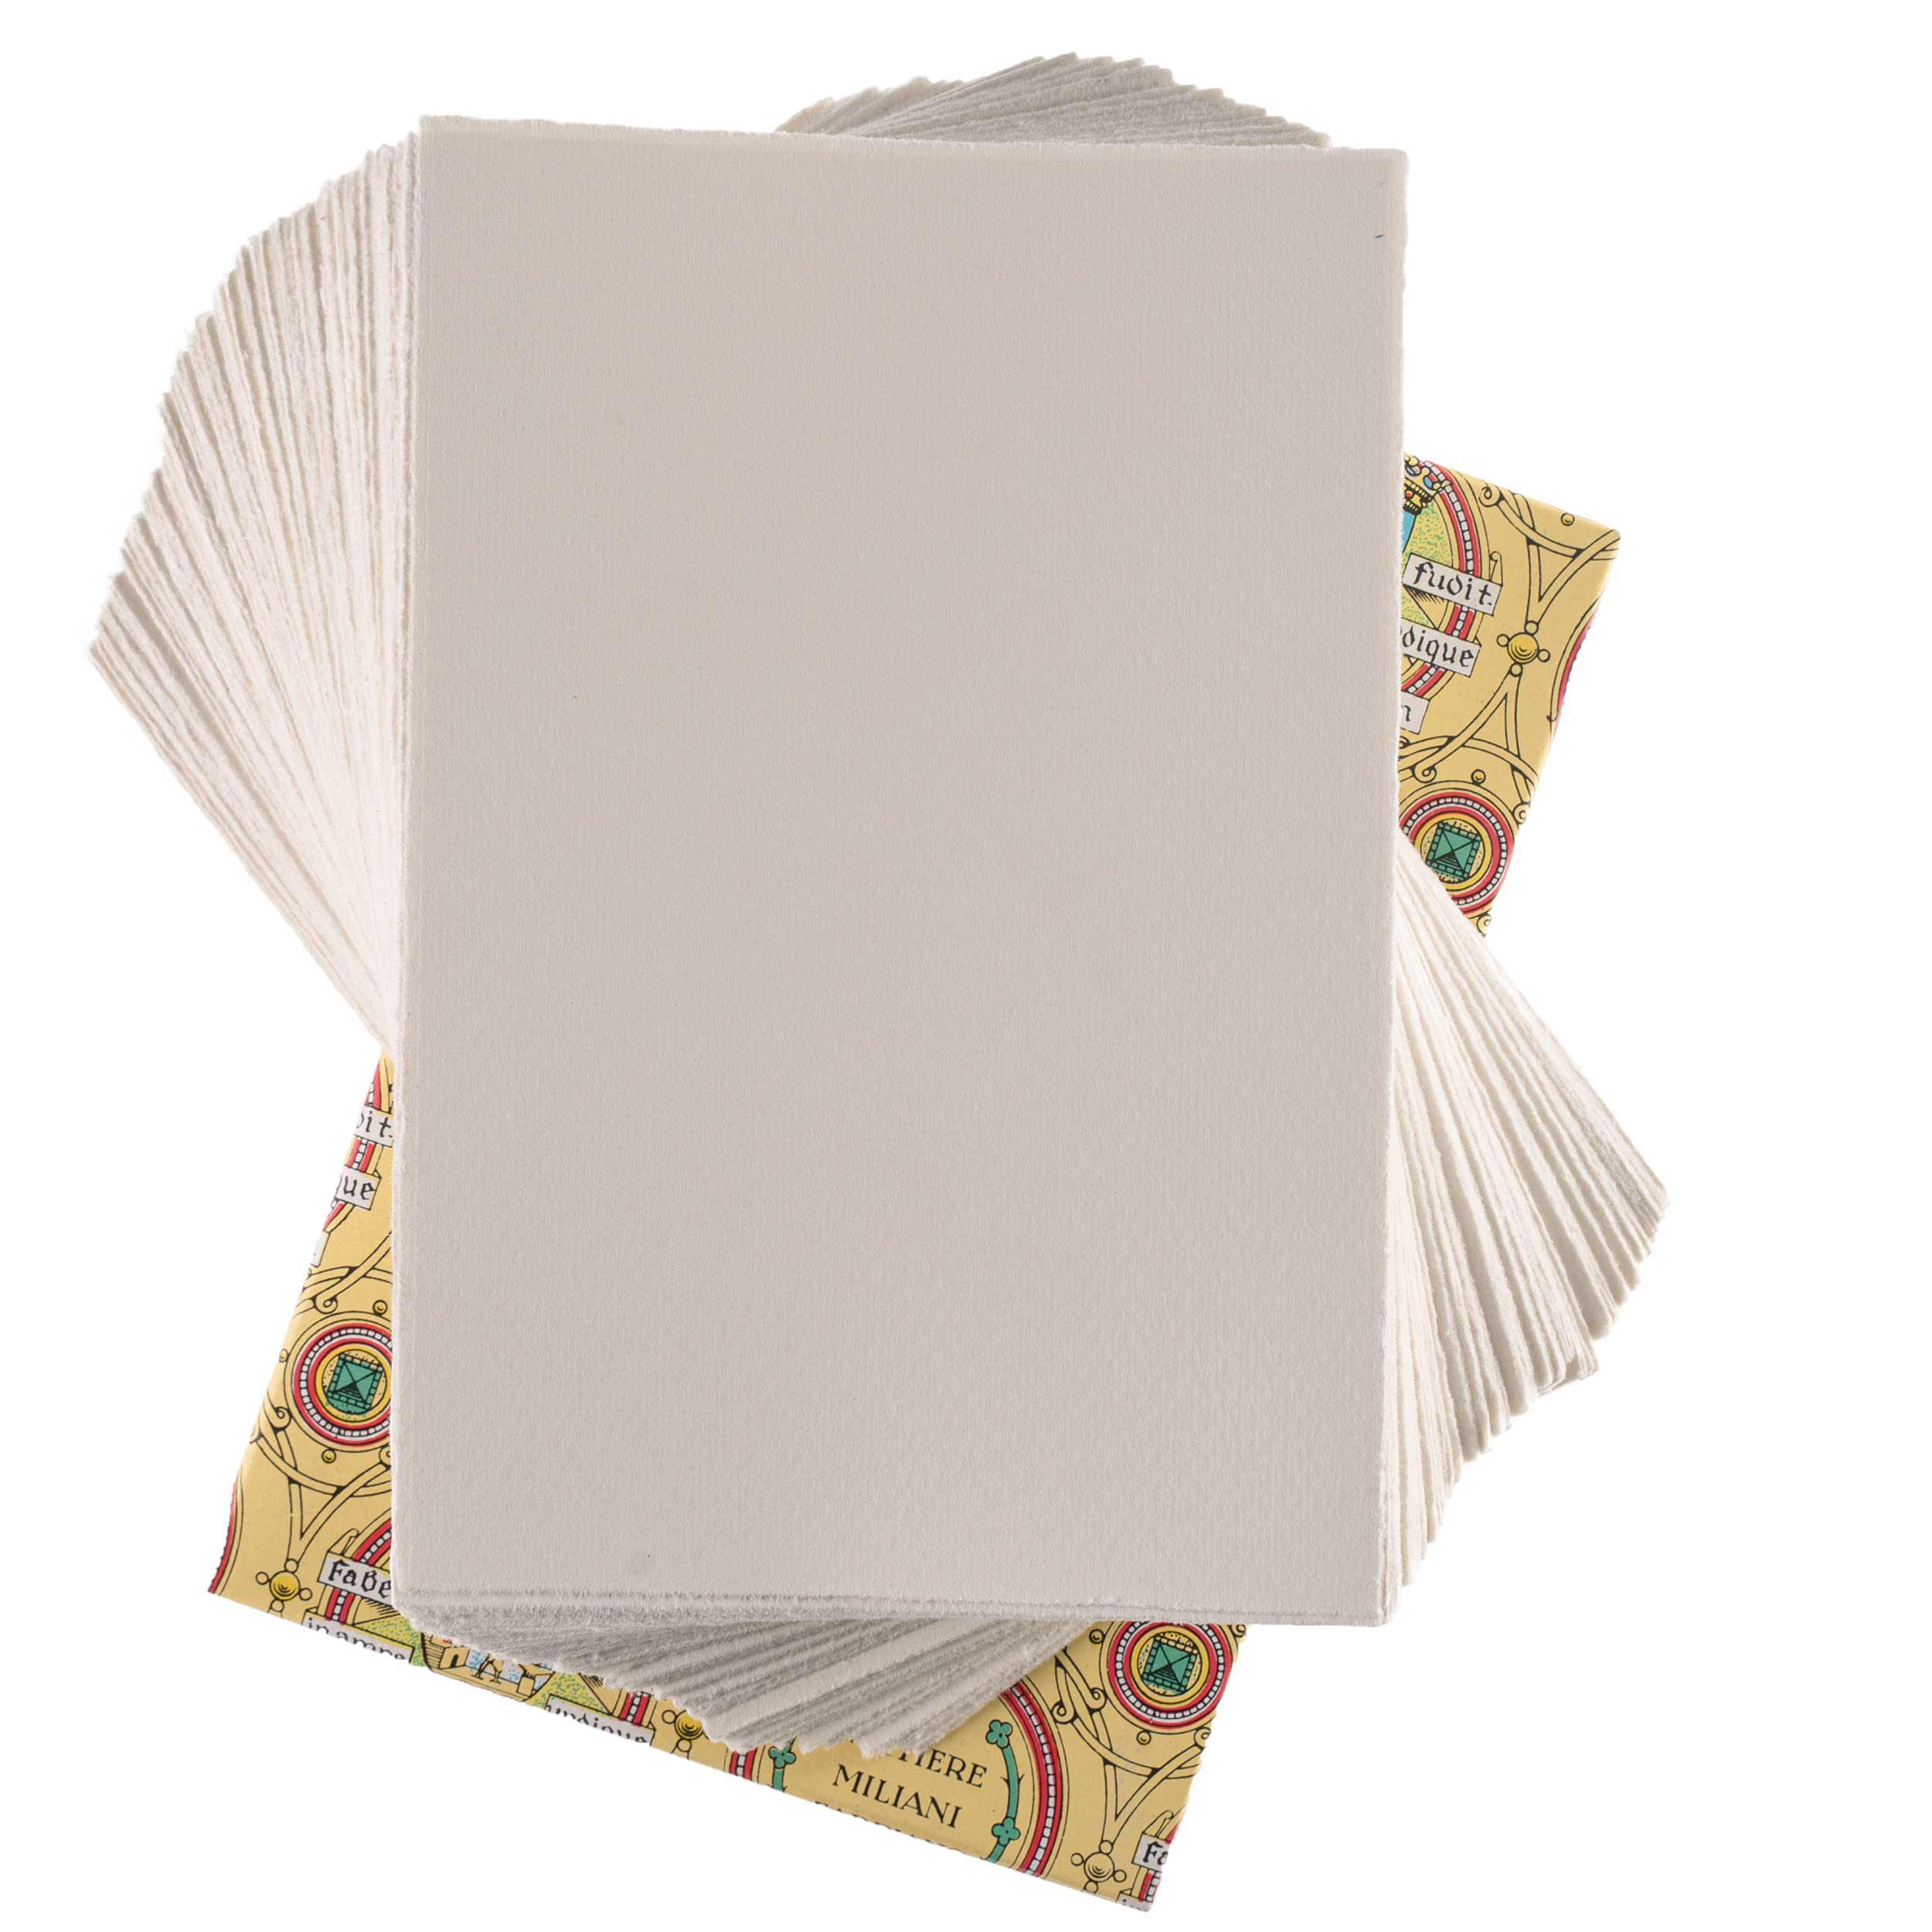 Fabriano Medioevalis Single Flat Cards / Small